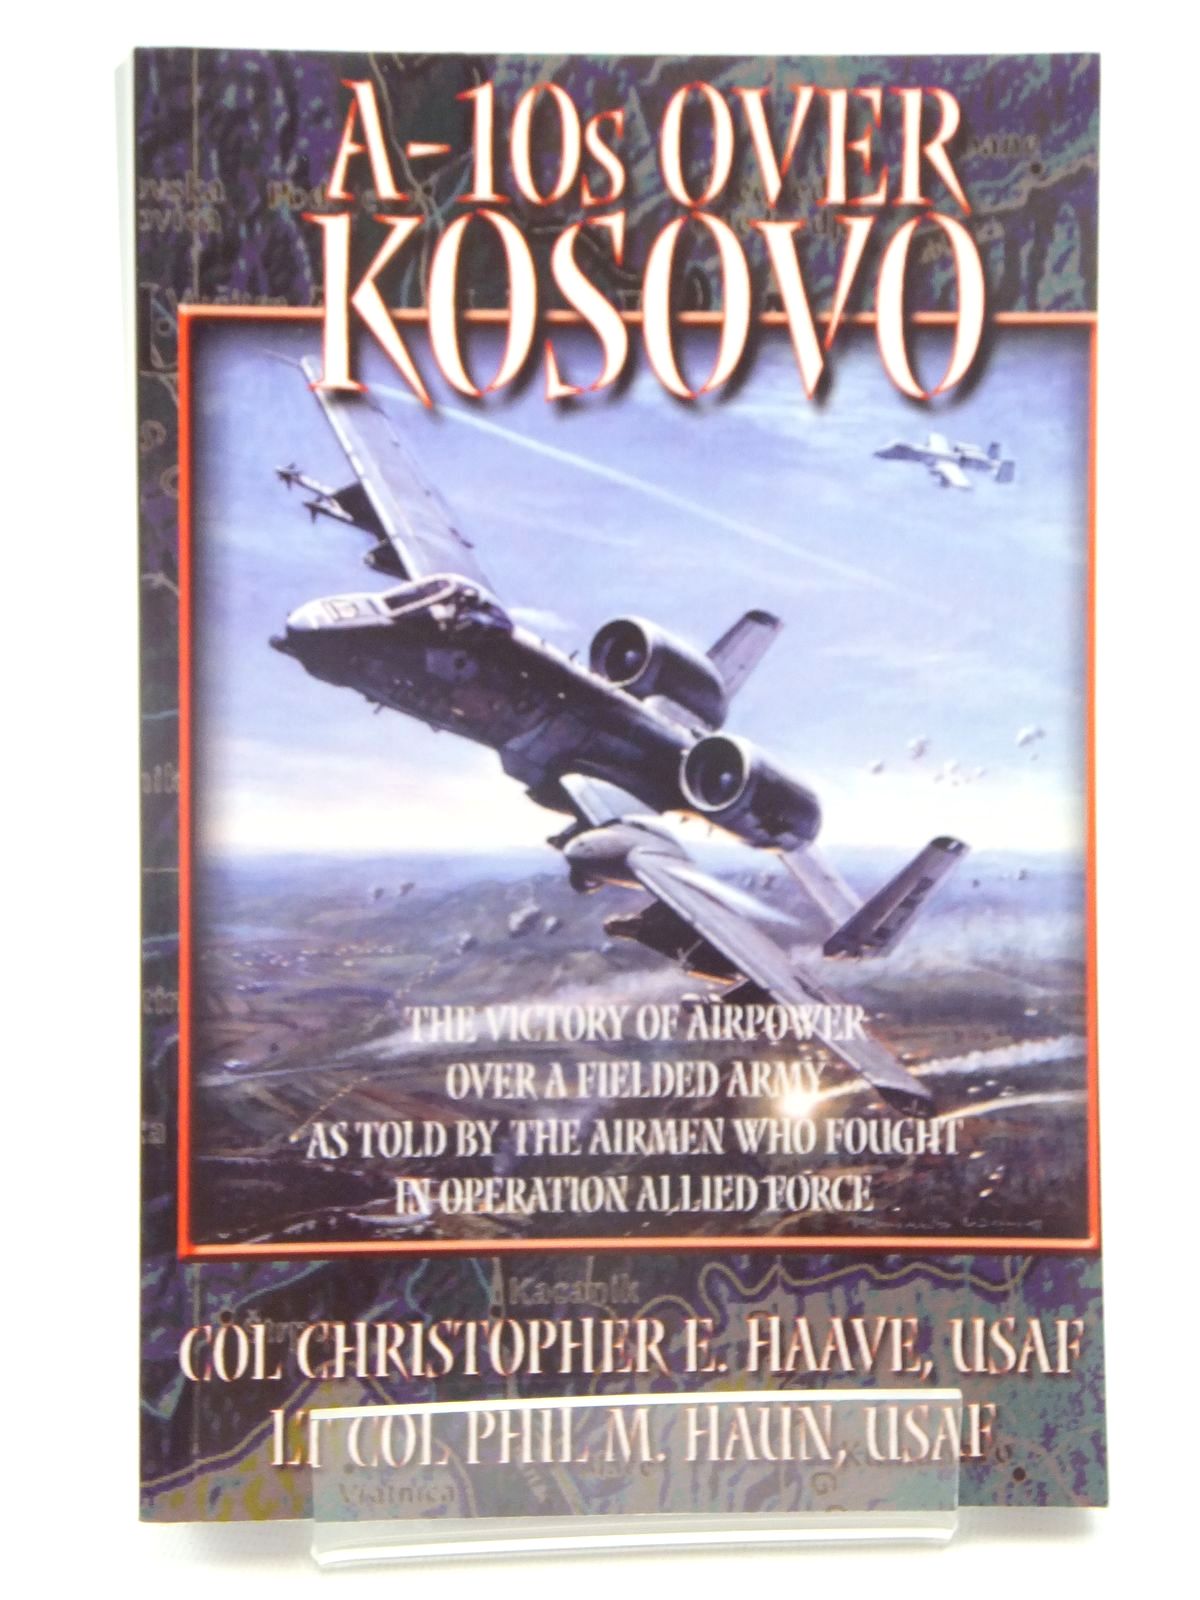 A-10S OVER KOSOVO - Haave, Christopher E. & Haun, Phil M.